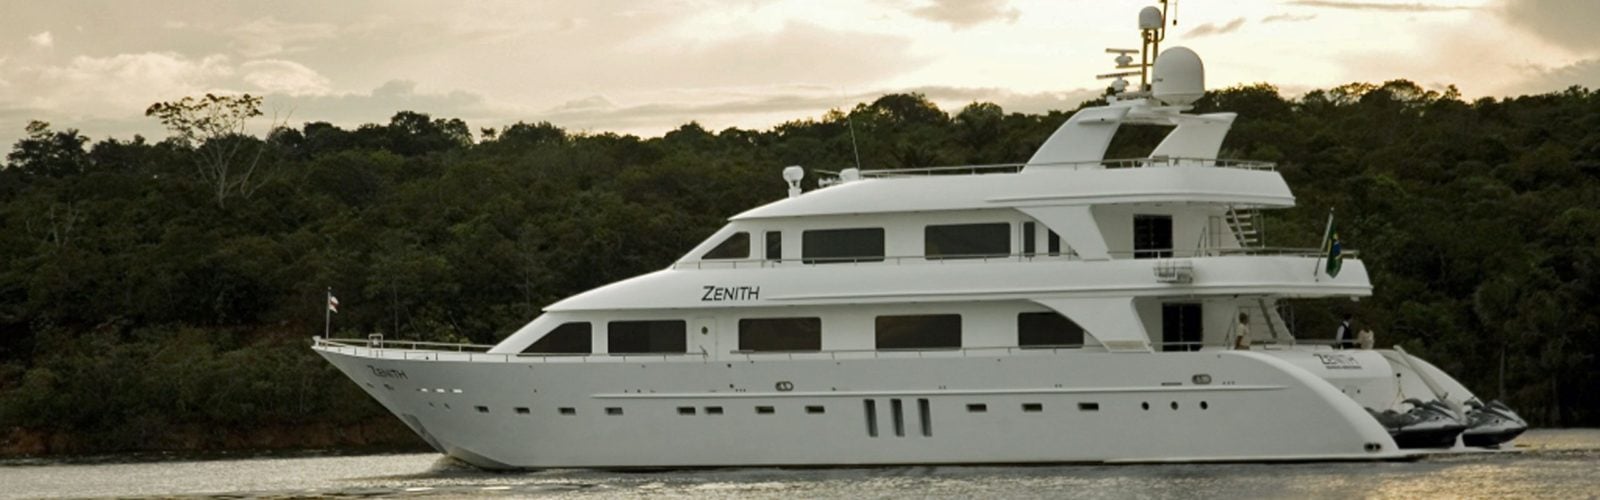 zenith-cruise-ship-amazon